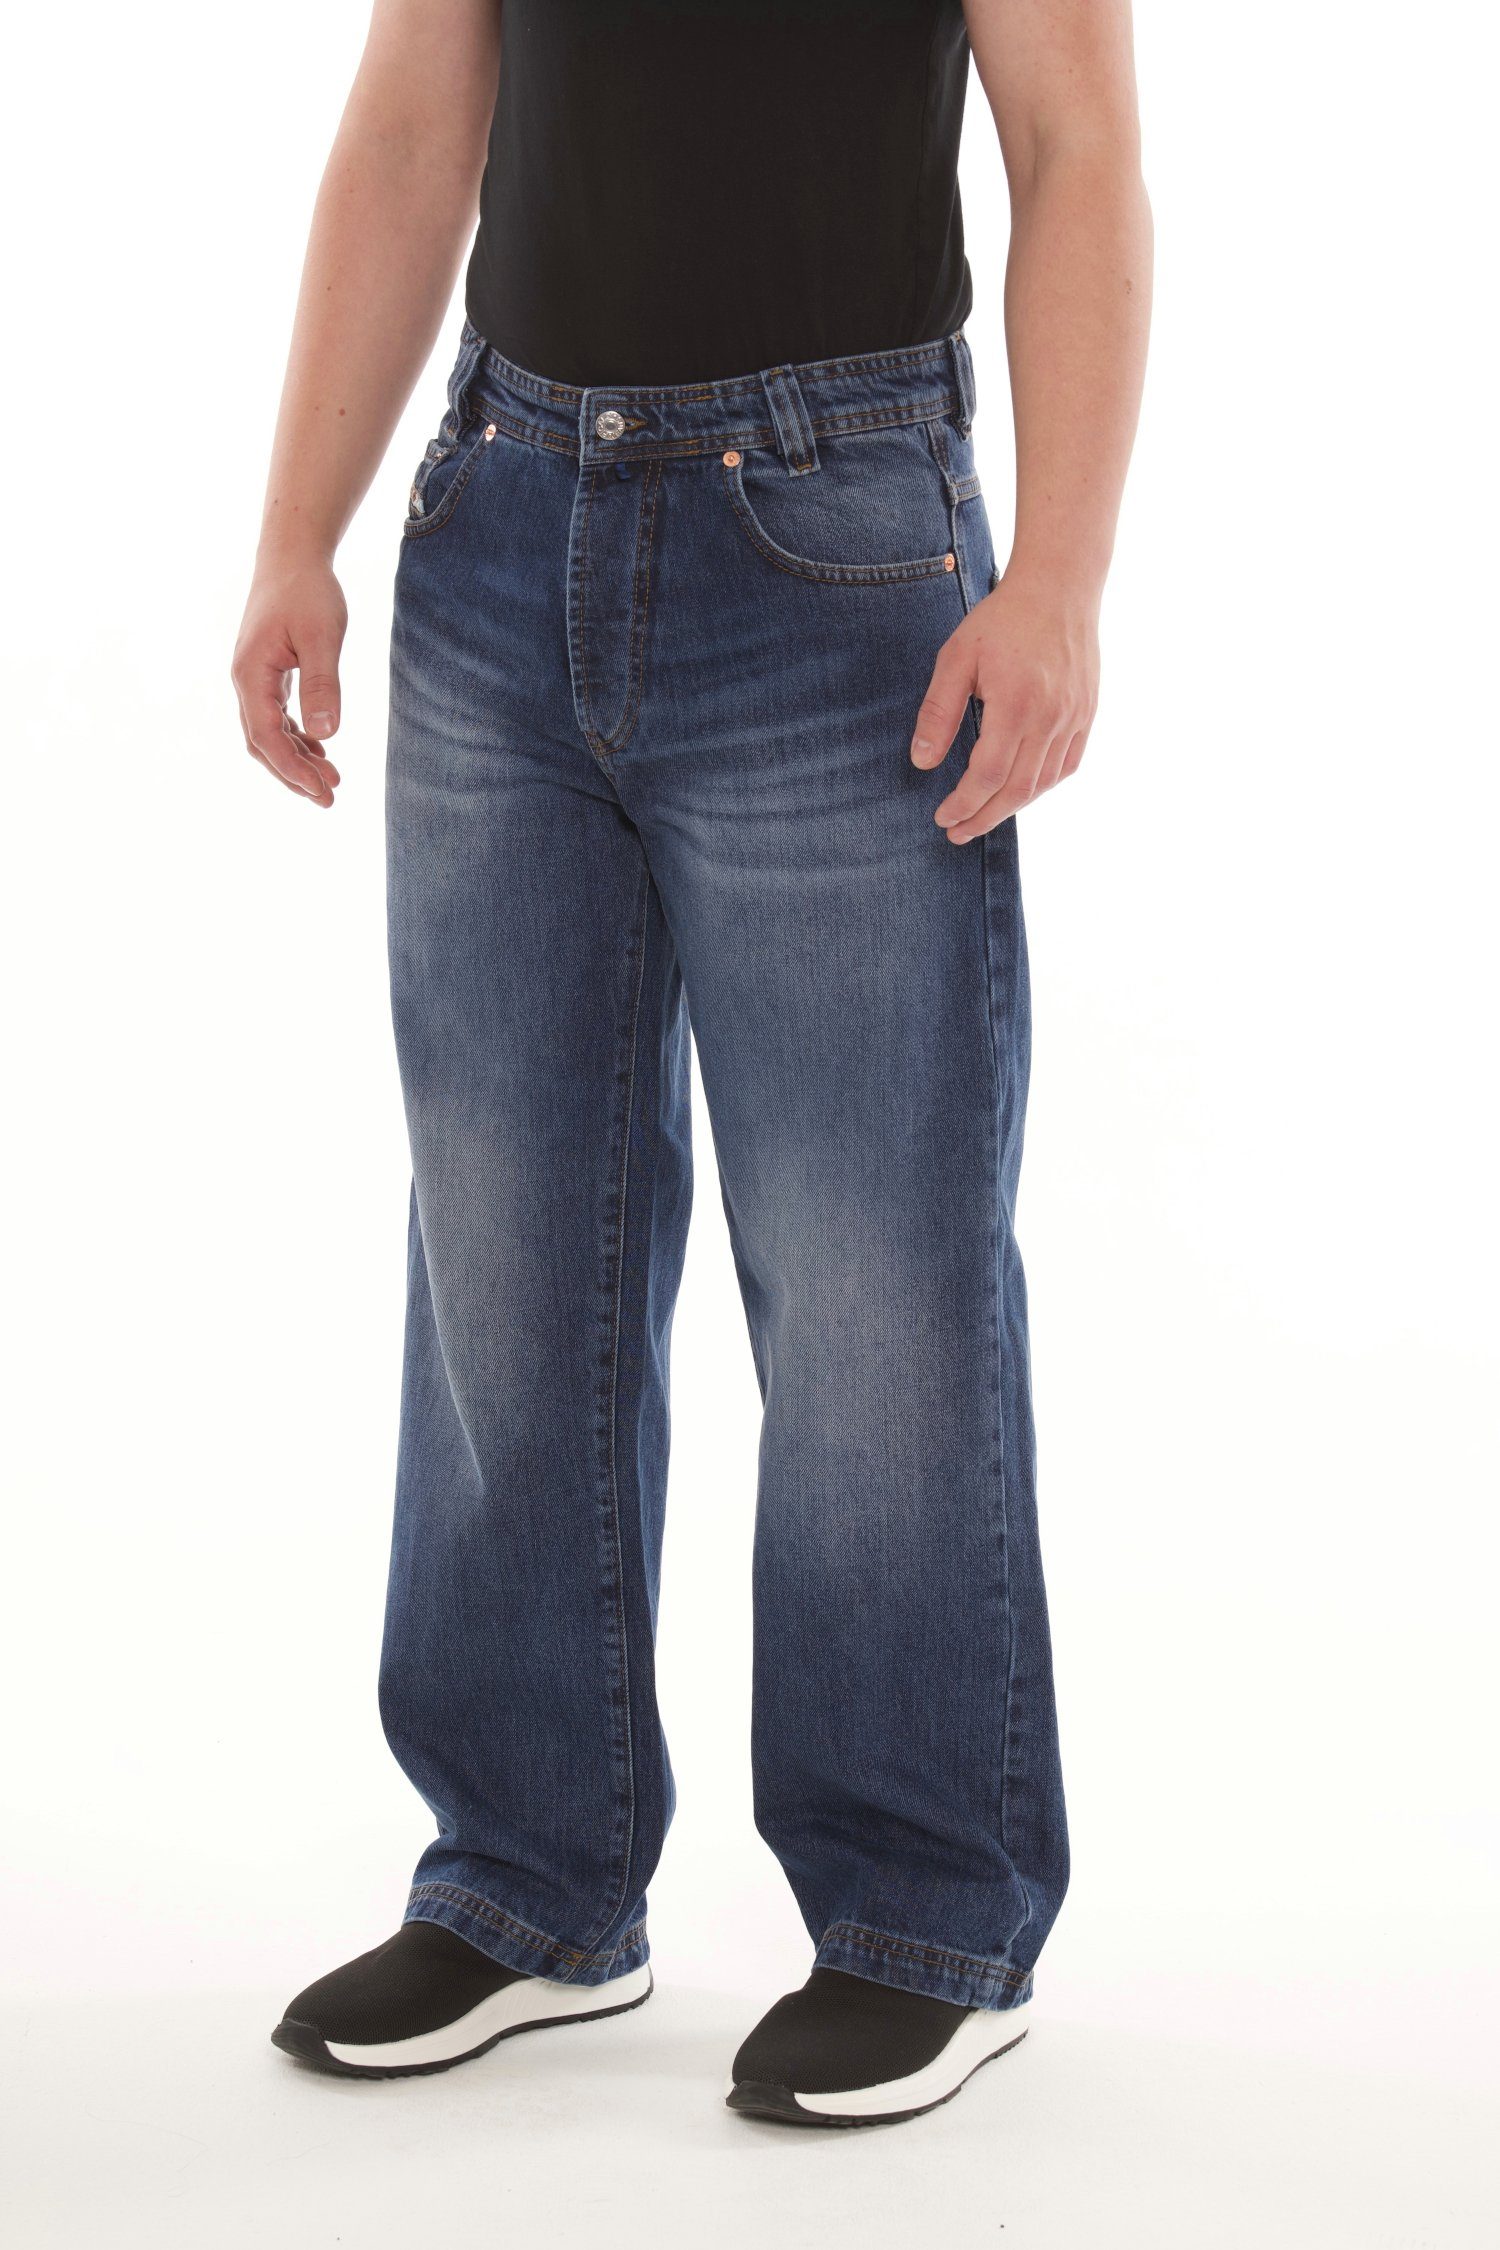 PICALDI Jeans Weite Straight Zicco Tindery Baggy Fit, 474 Schnitt Gerader Leg, Jeans lässiger